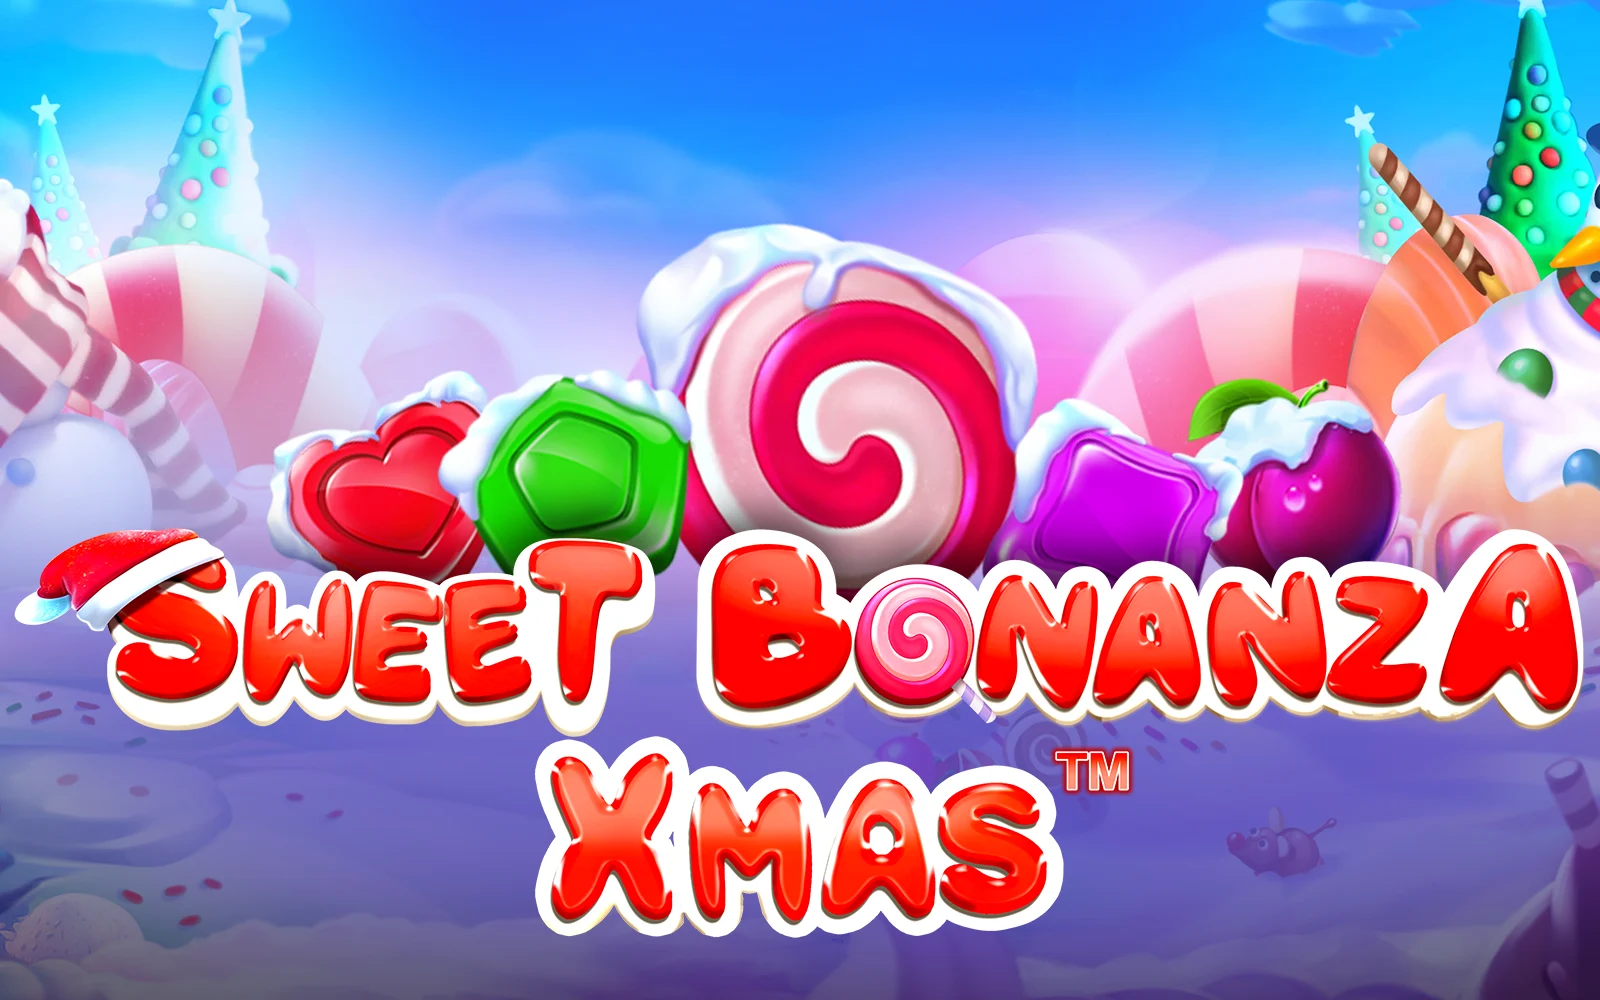 Play Sweet Bonanza Xmas™ on Starcasino.be online casino